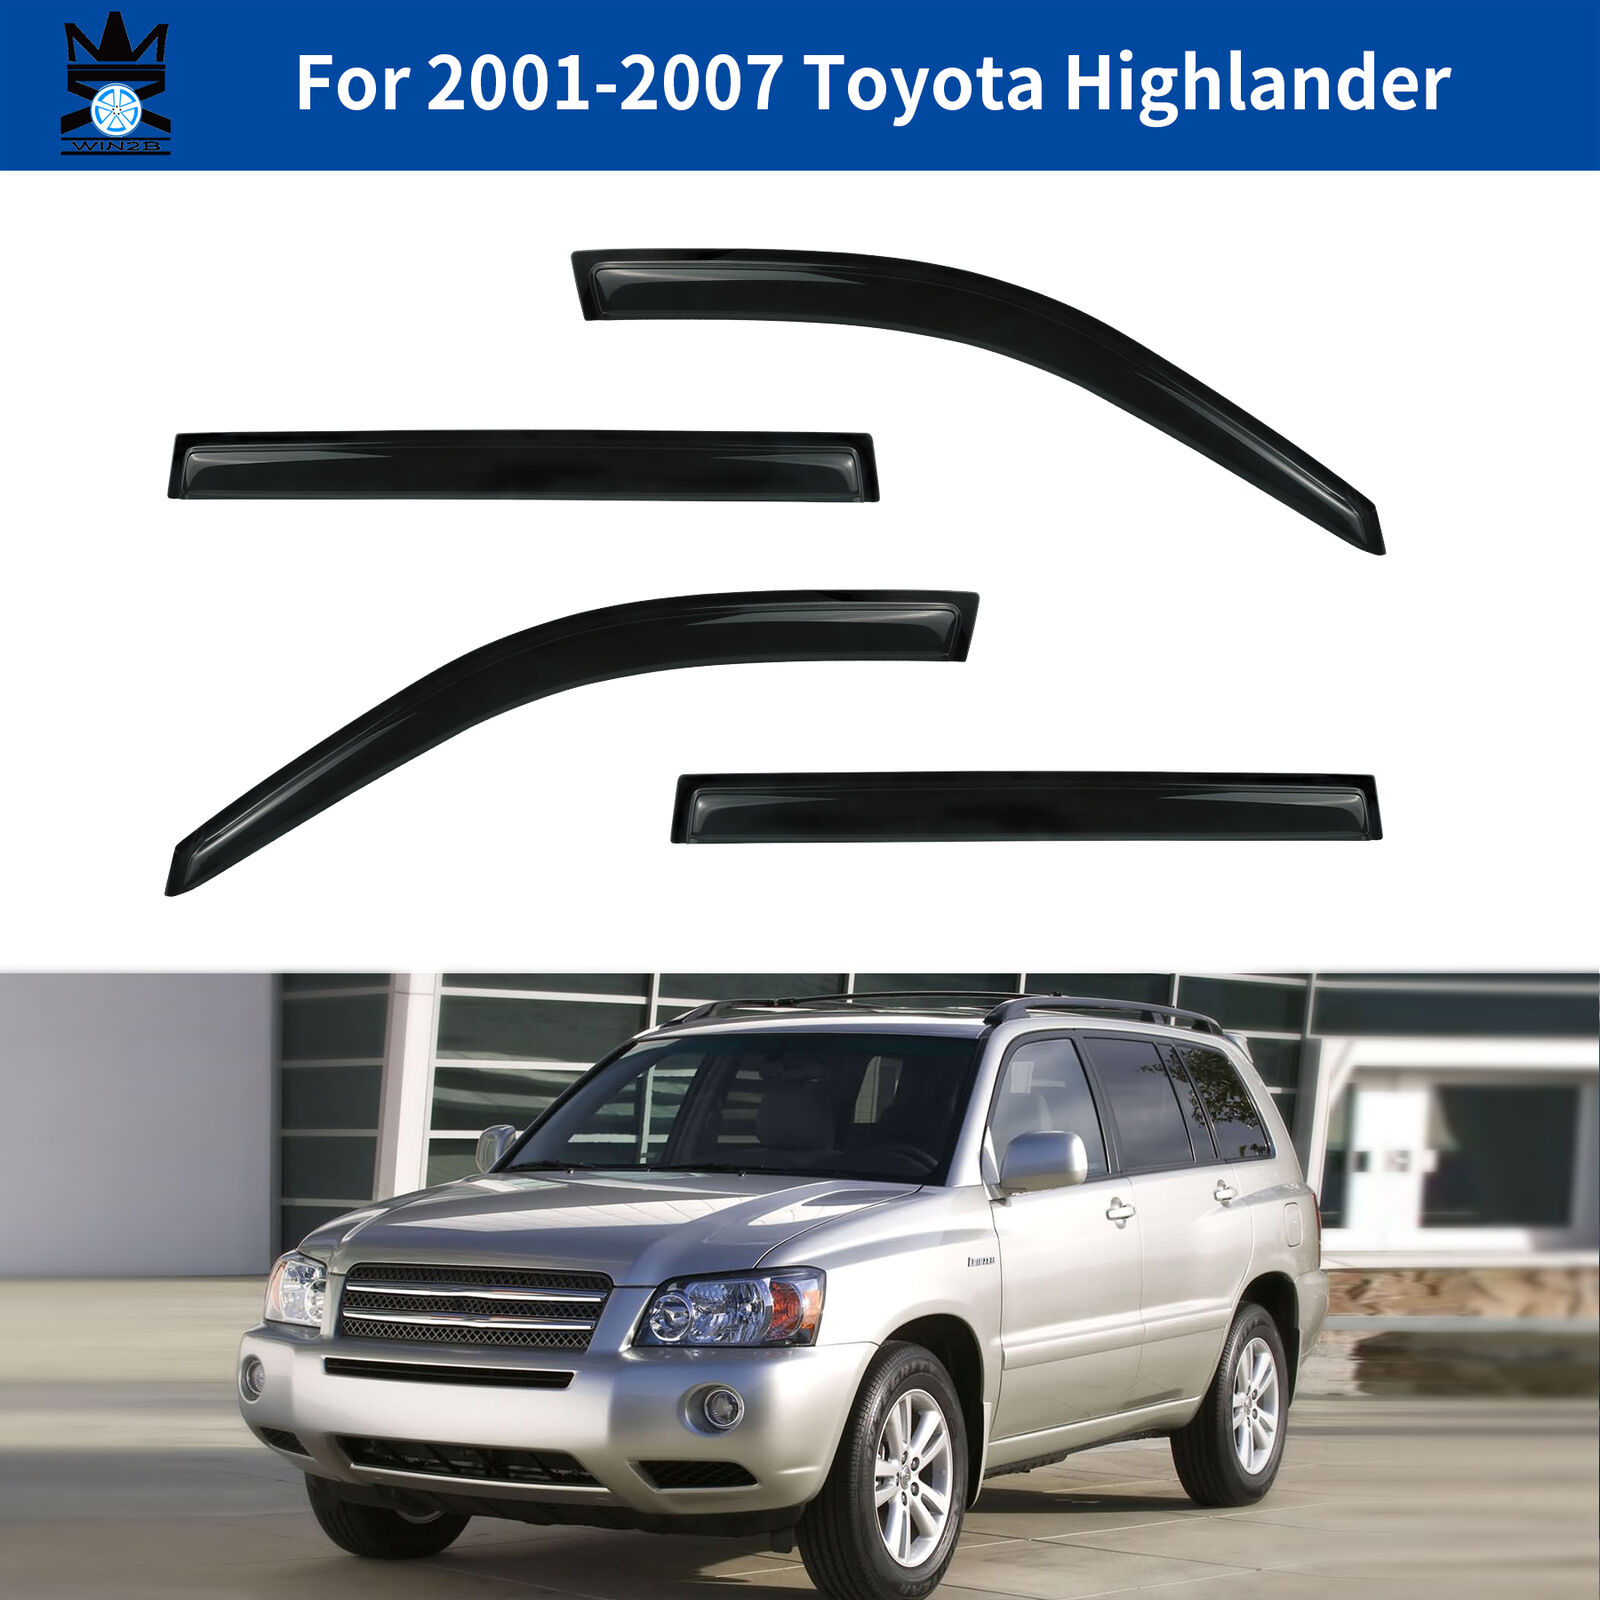 For 2001-2007 Toyota Highlander Window Visor Deflector Rain Guard 4-Piece Set